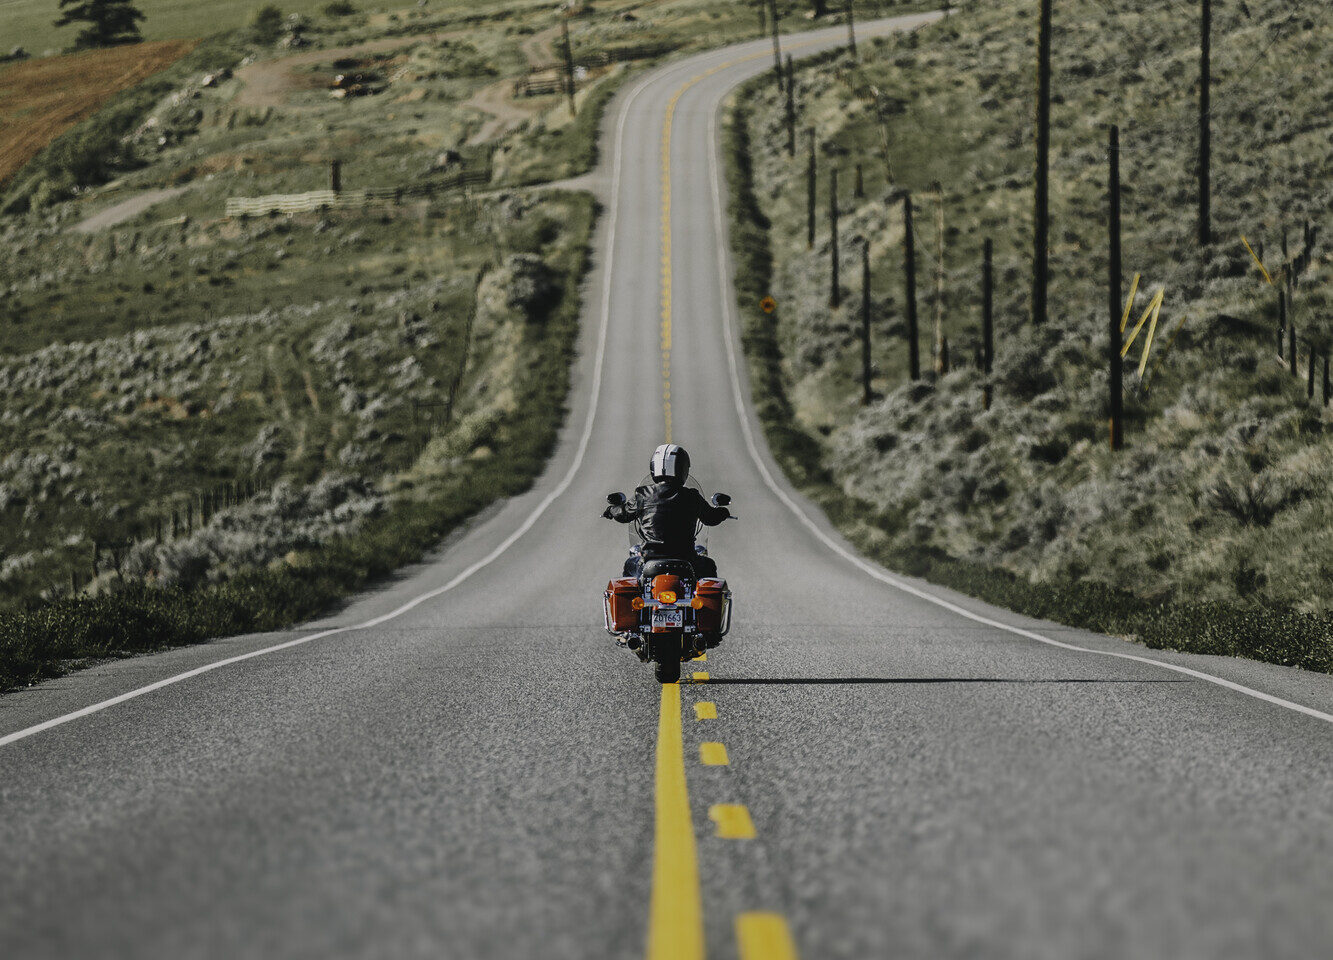 Jack Madeley Motorcycling Image